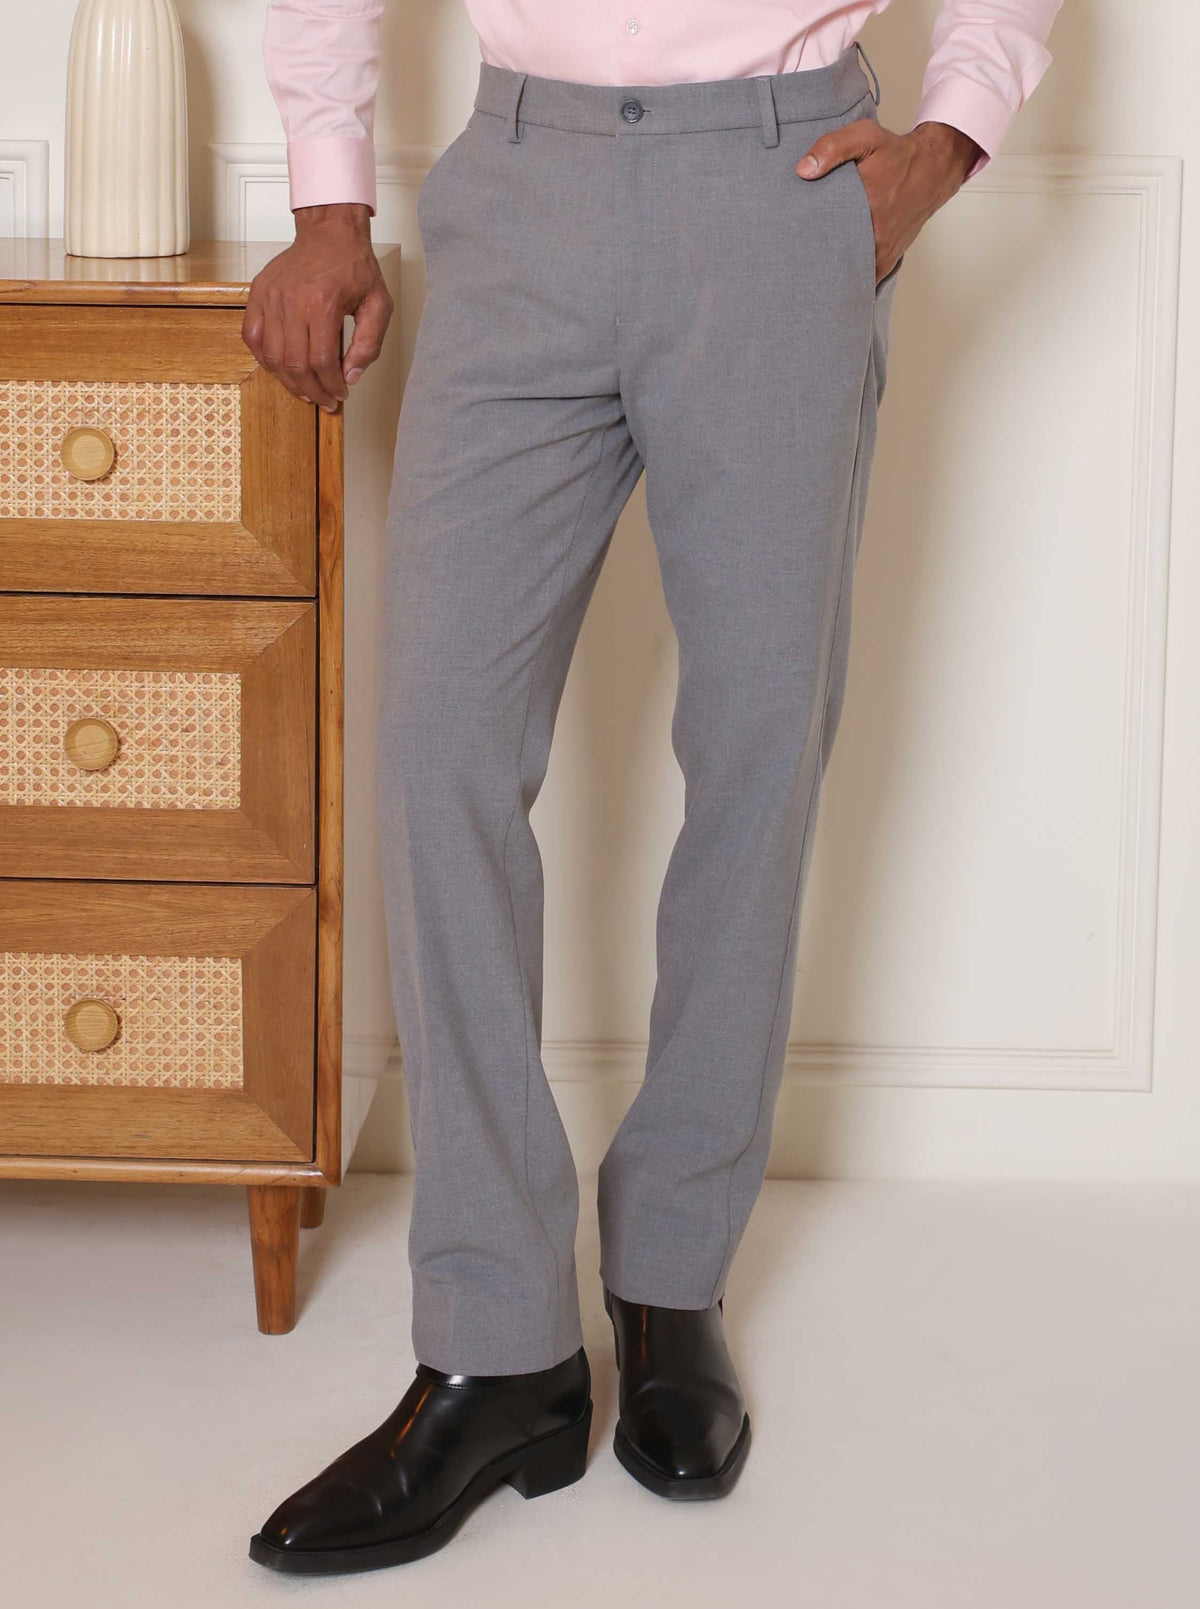 Flex Waist 4-Way Stretch Formal Trousers in Light Grey- Slim Fit